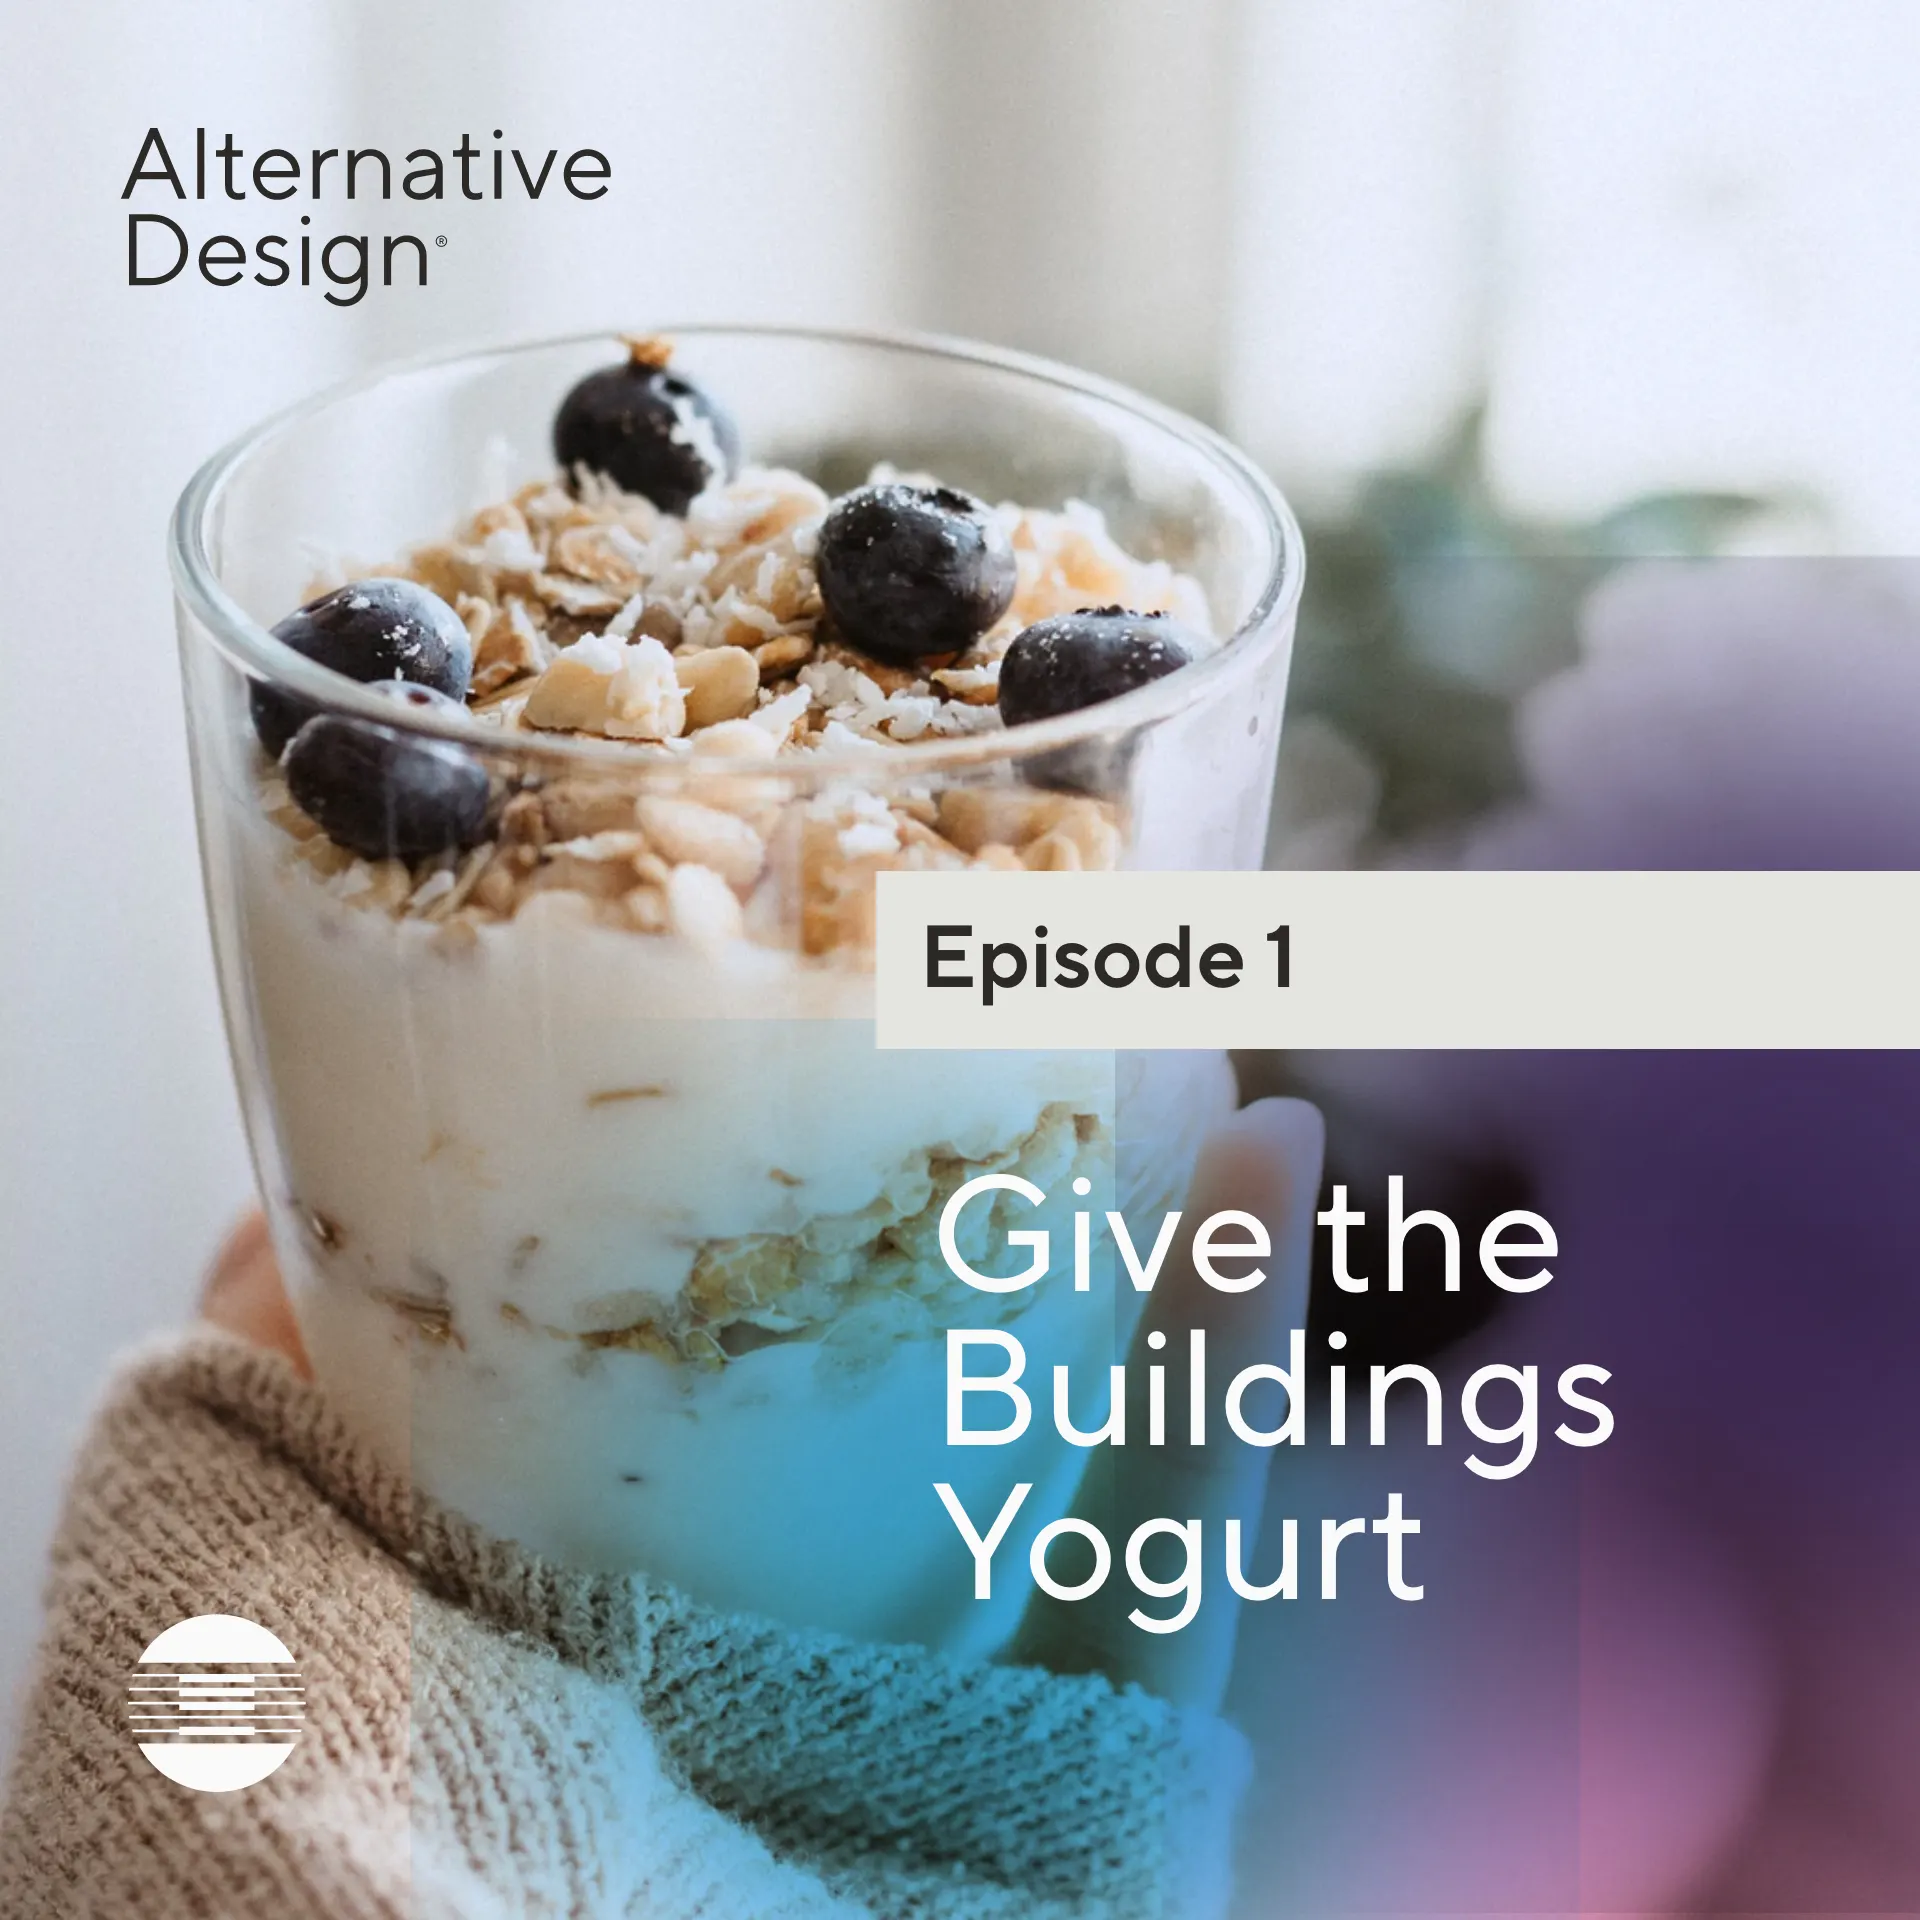 Episode 1 - Give the Buildings Yogurt